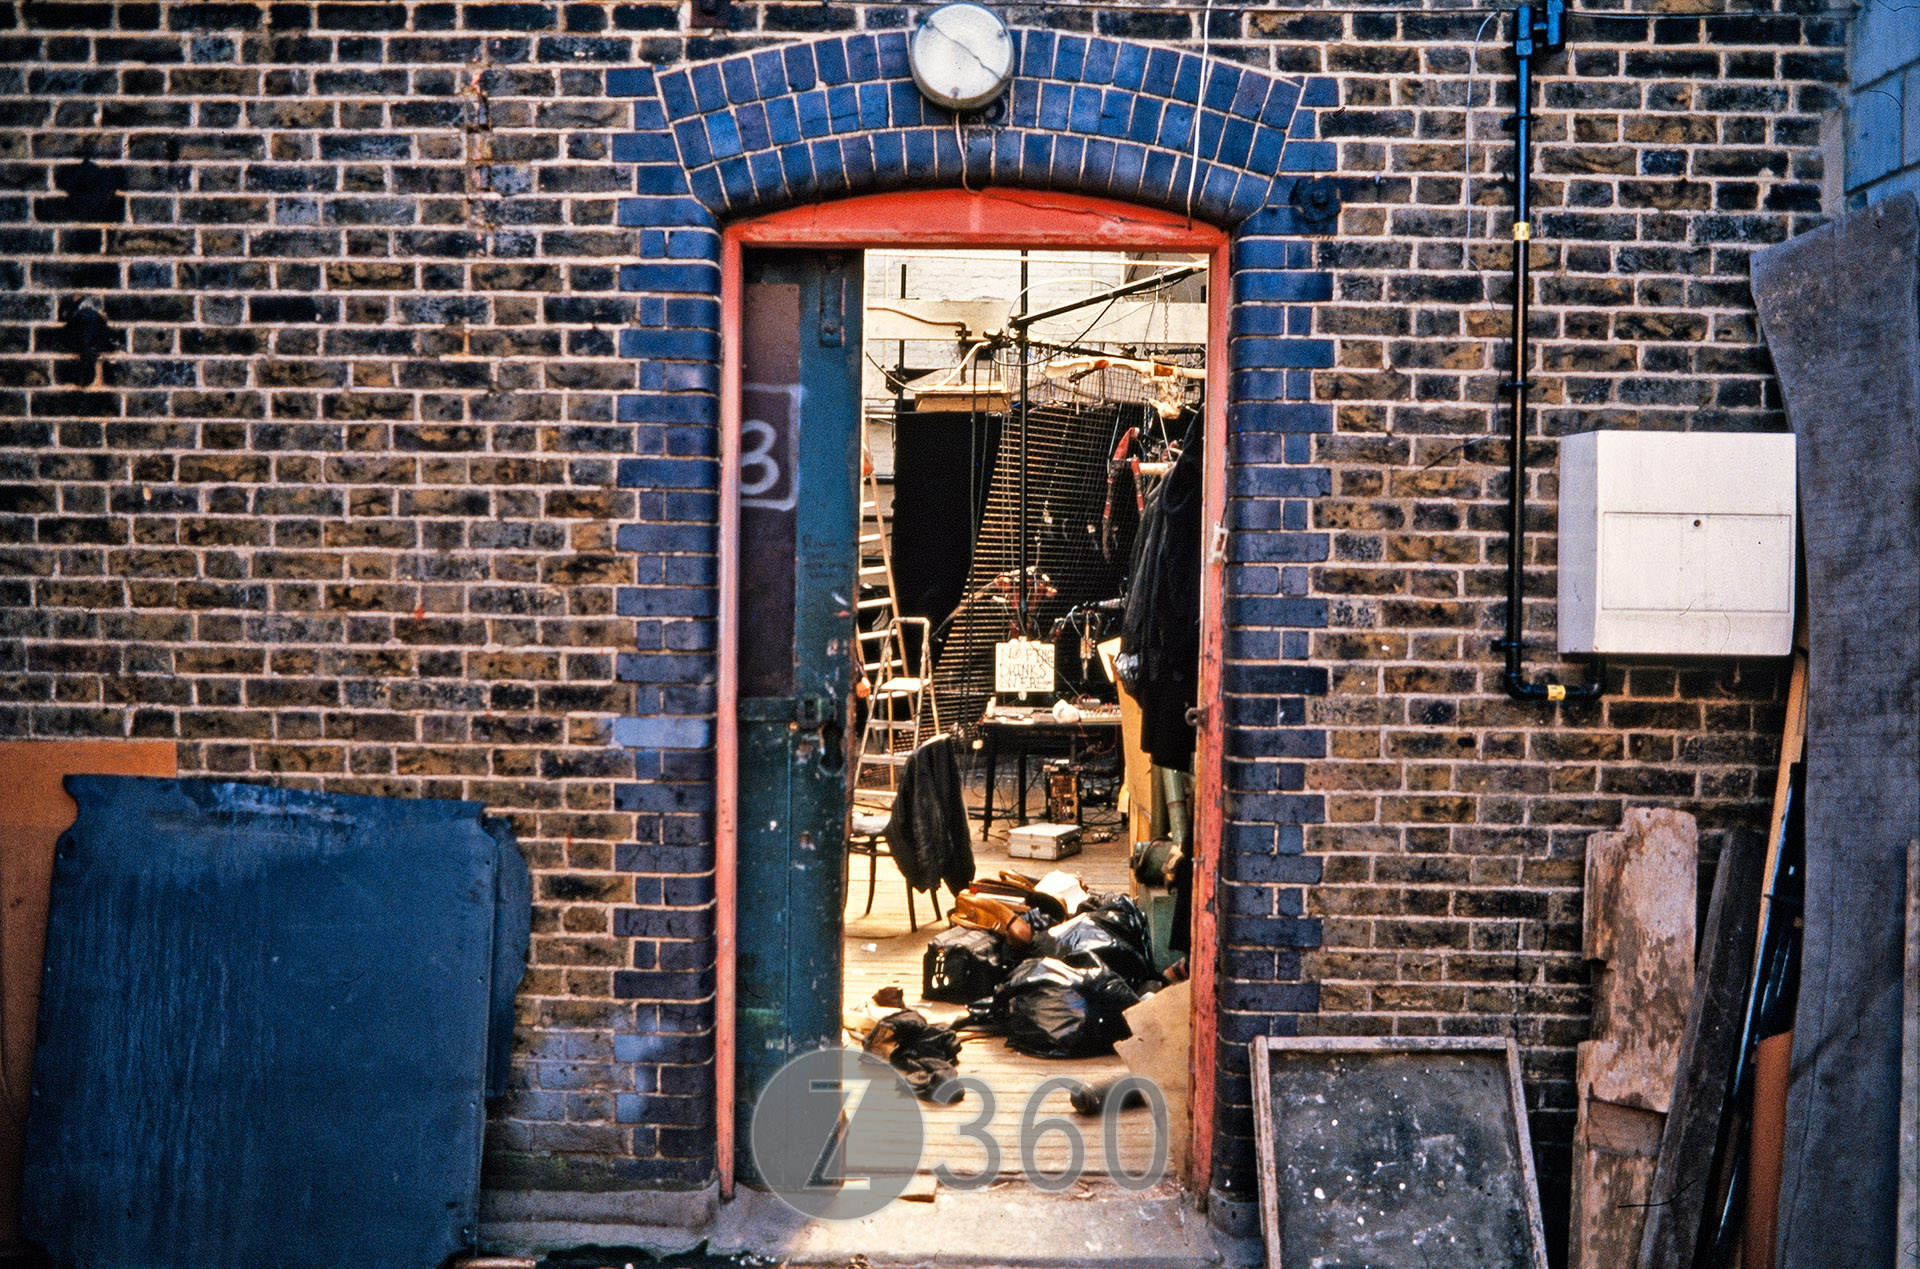 Jim Whiting Workshop, Clapton London